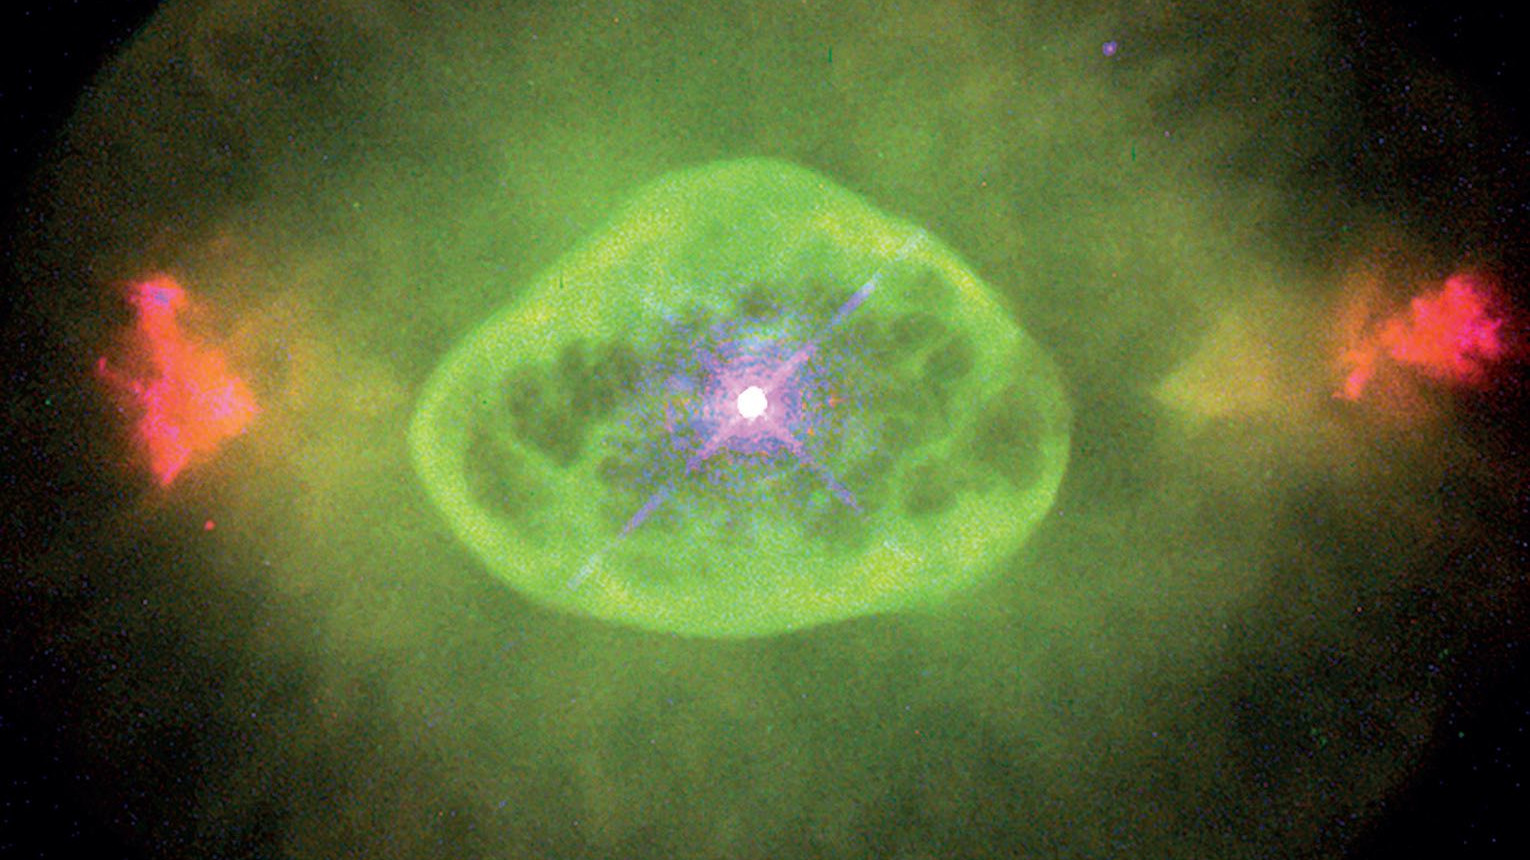 Nebuloasa planetară NGC 6826 care clipește, văzută prin telescopul Hubble. B. Balick (University of Washington), J. Alexander (University of Washington), A. Hajian (U.S. Naval Observatory), Y. Terzian (Cornell University). M. Perinotto (Universitatea Florența), P. Patriarchi (Arcetri-Observatiorium) și NASA/ESA